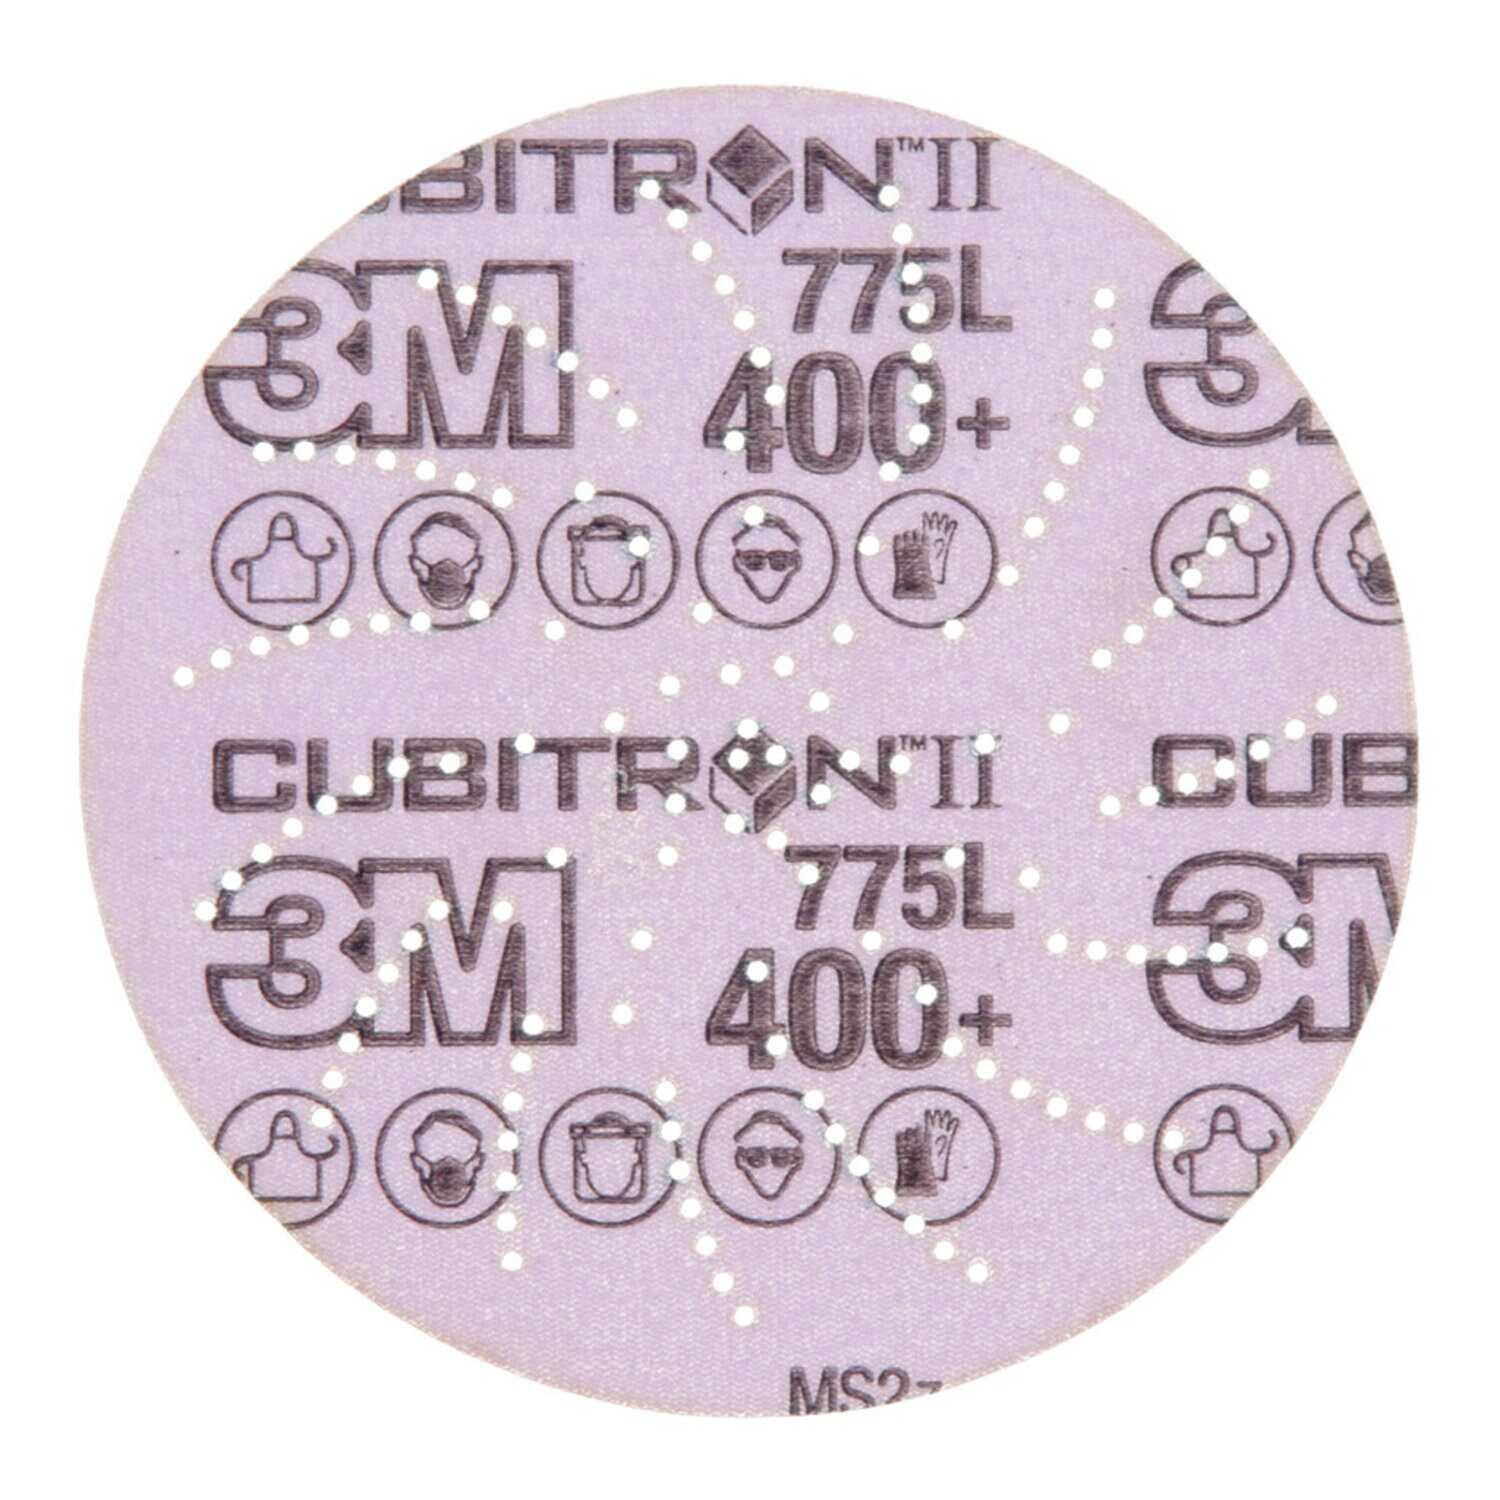 7100145404 - 3M Xtract Cubitron II Film Disc 775L, 400+, 5 in, Die 500LG,
50/Carton, 250 ea/Case